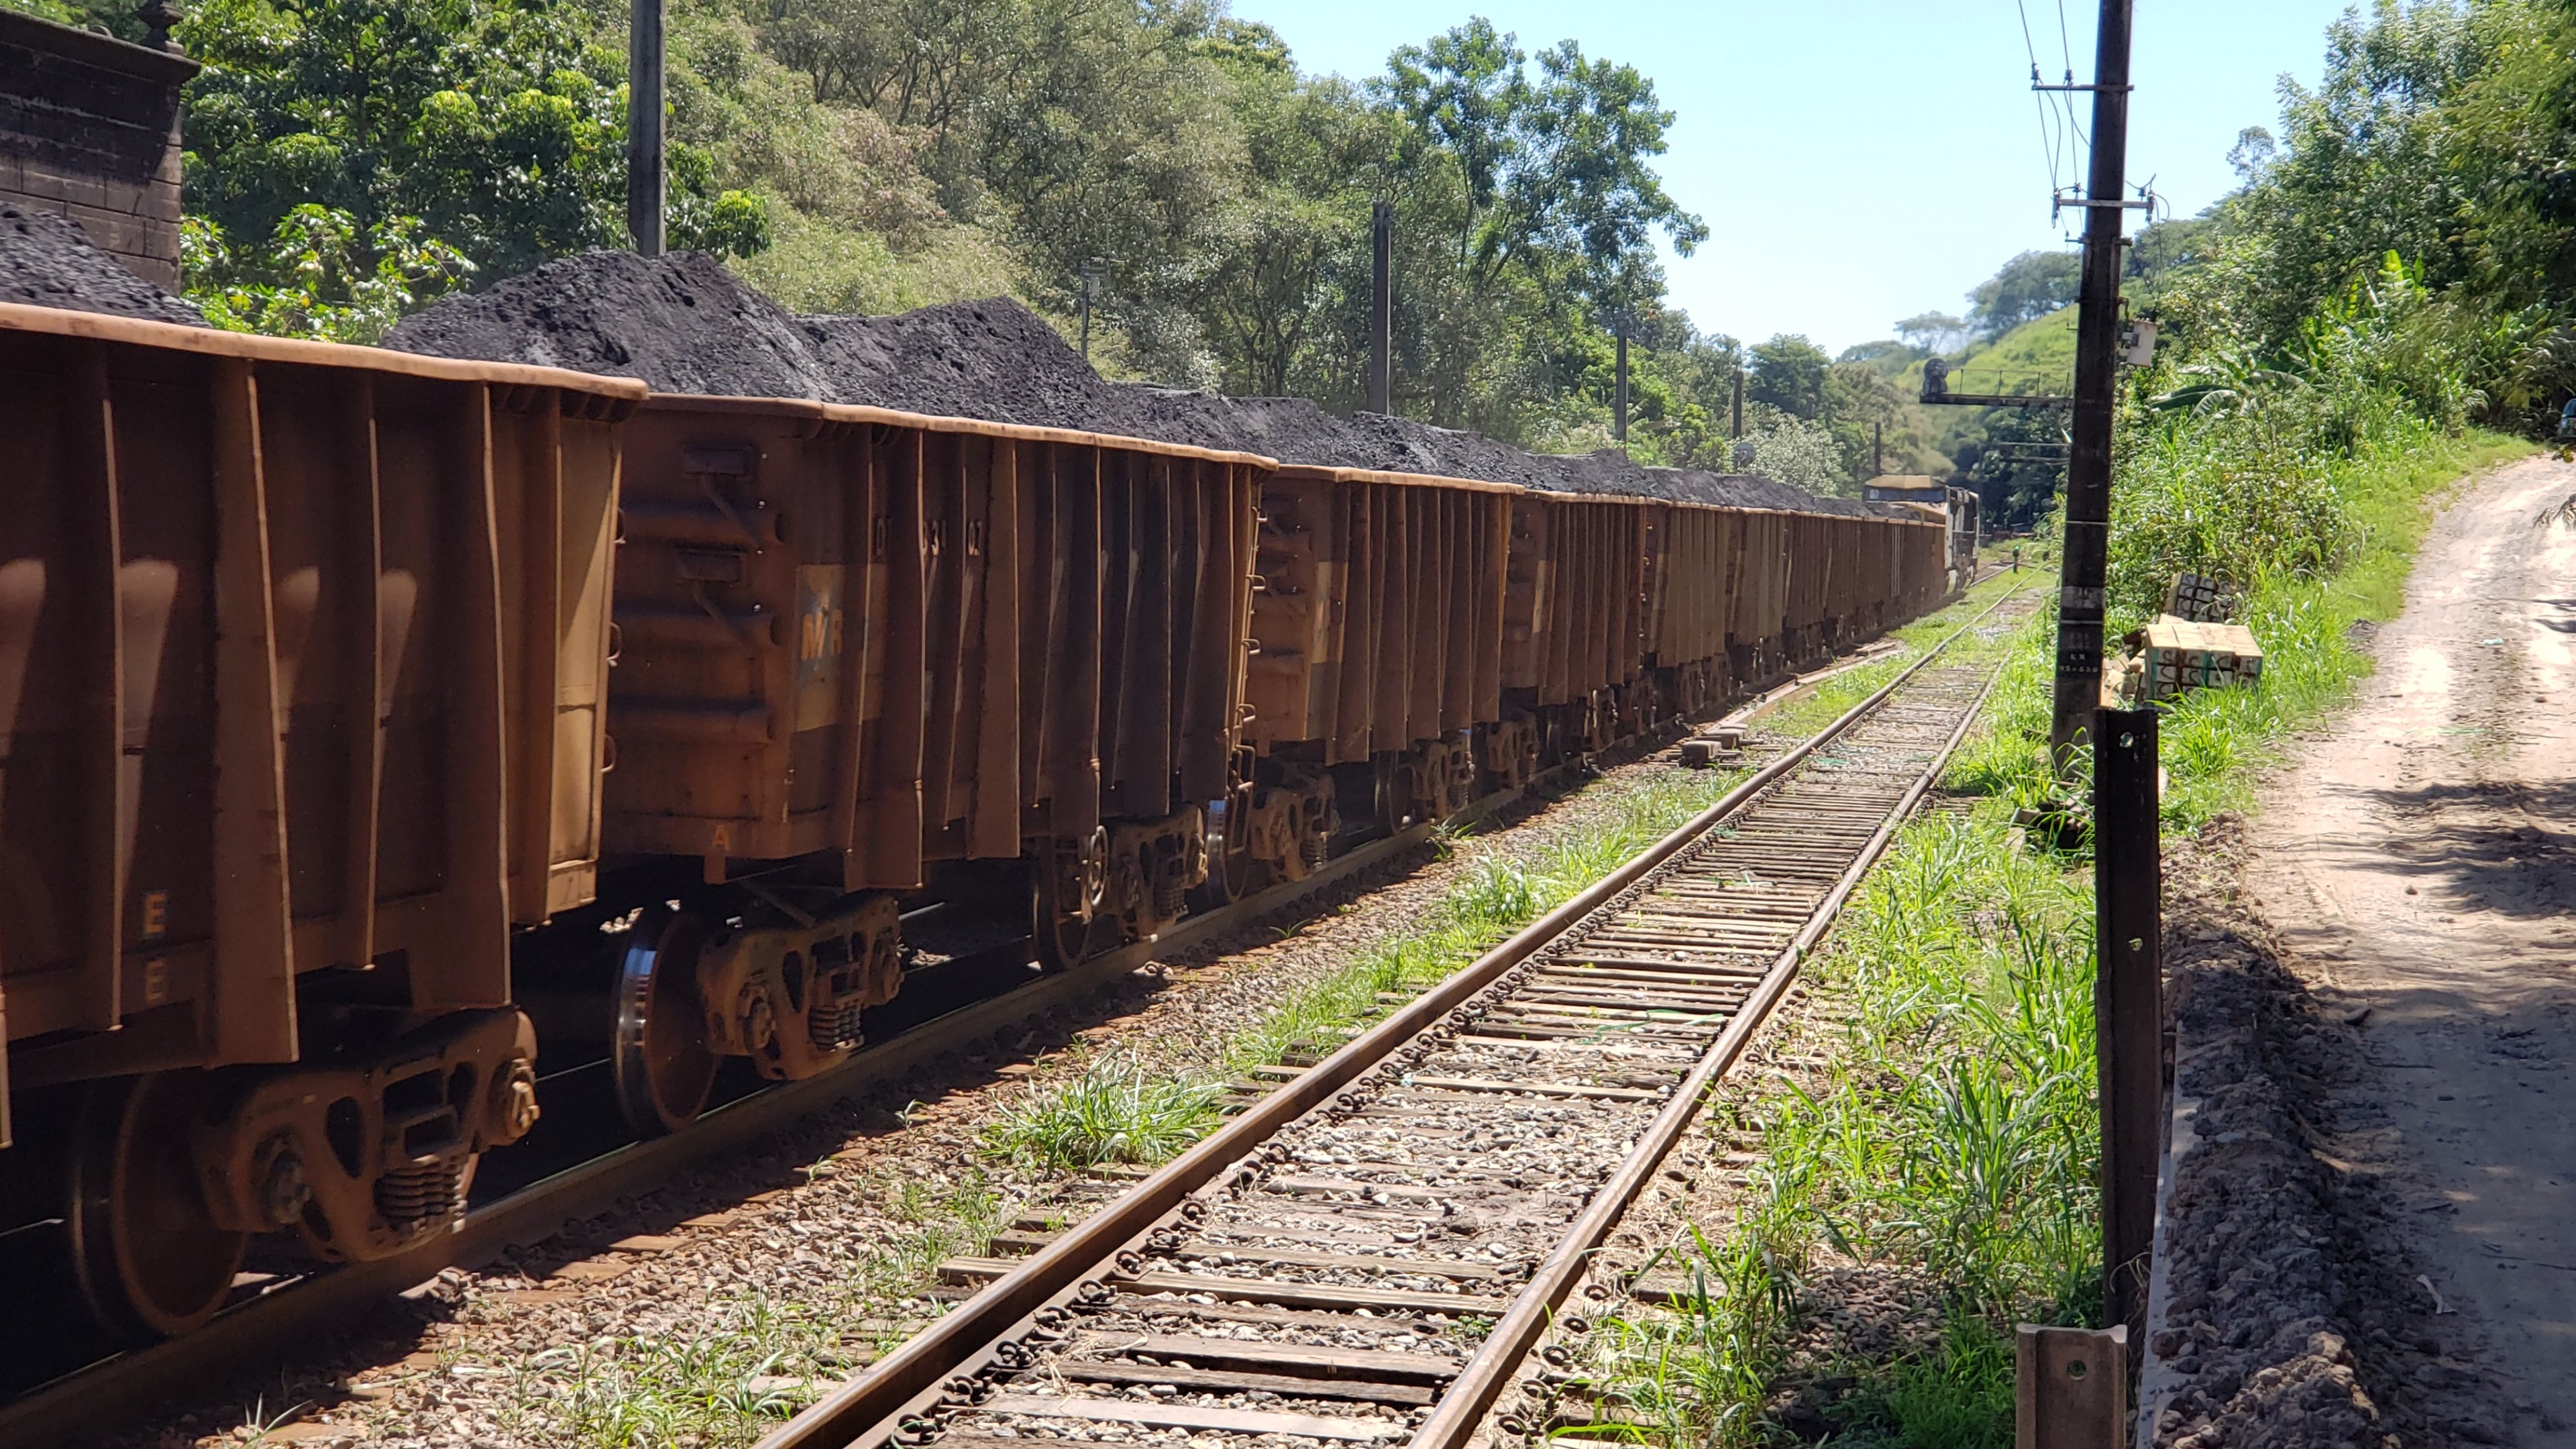 Ore train at Neri Ferreira siding